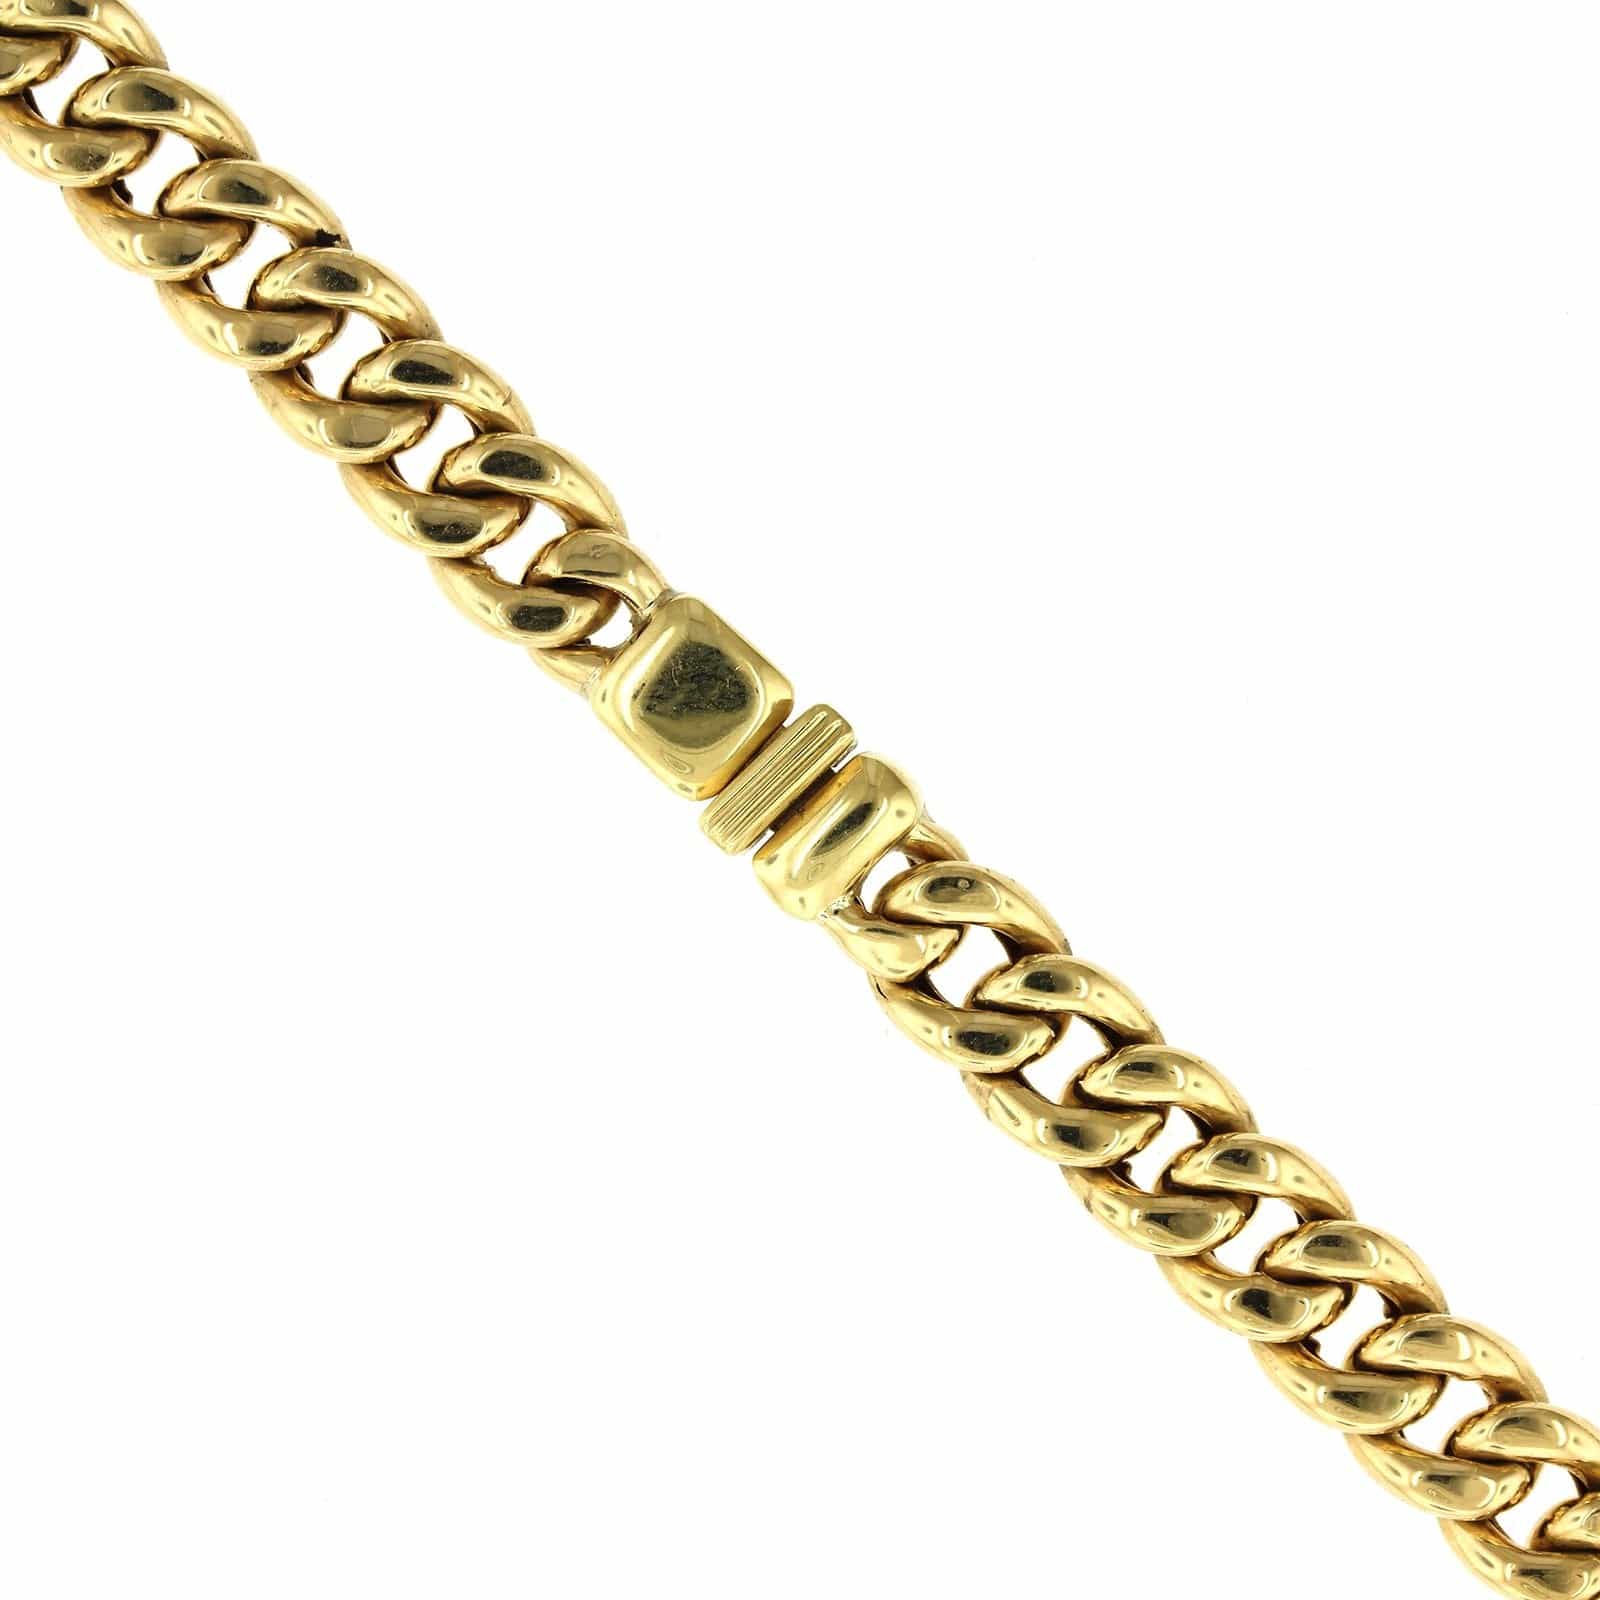 18K Yellow Gold Cuban Chain Diamond Necklace, Yellow Gold, Long's Jewelers